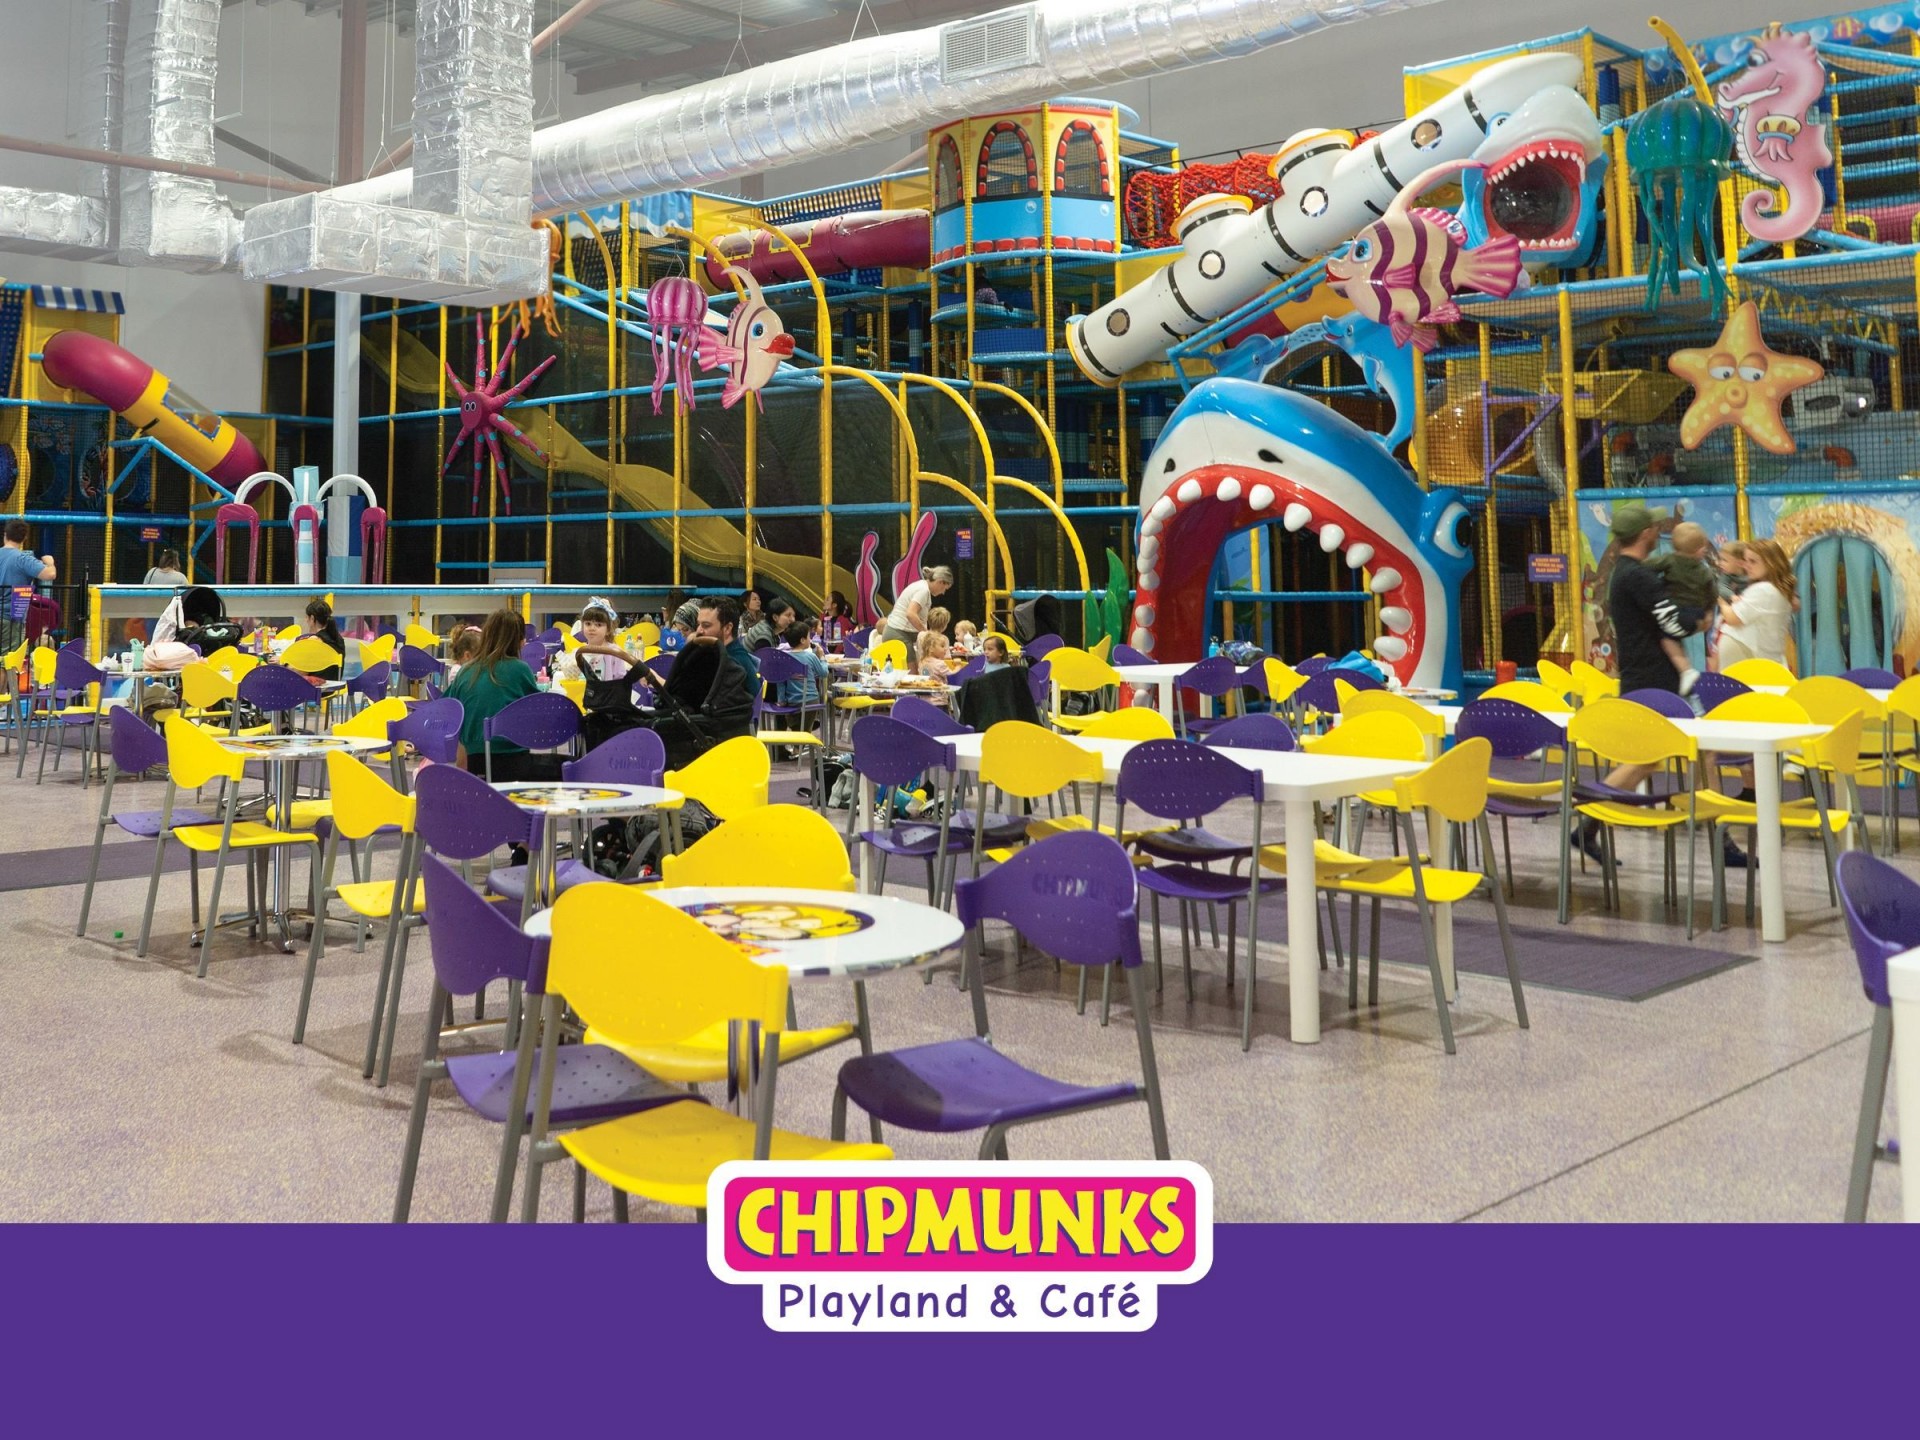 Chipmunks indoor playground franchise for sale - Canberra